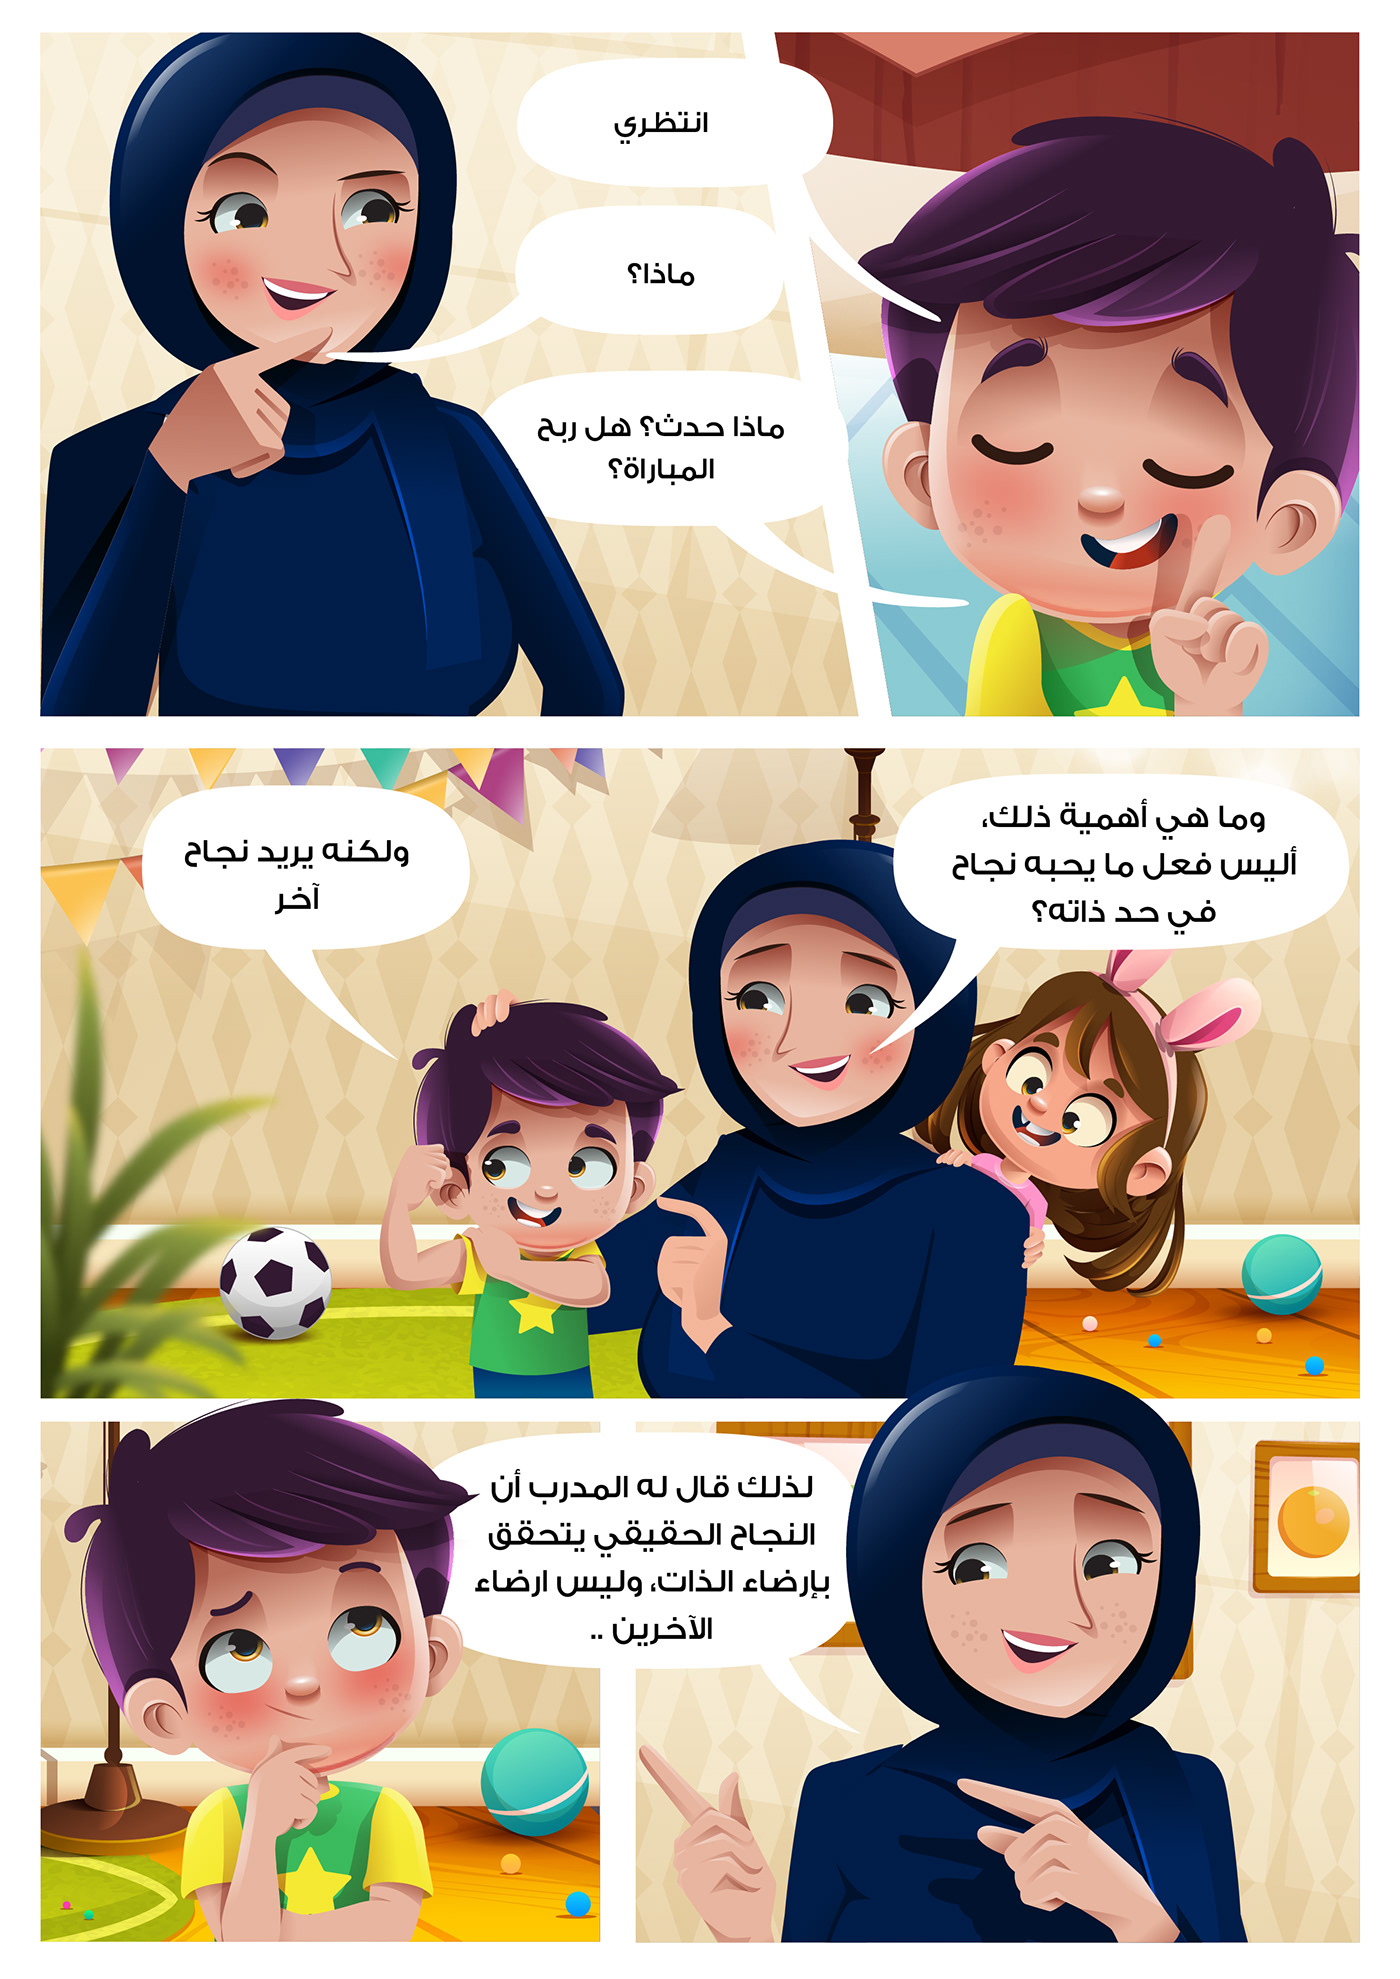 serag basel Arab kids Saudi character Character design  Digital Art  kids story children book kids illustration Drawing 